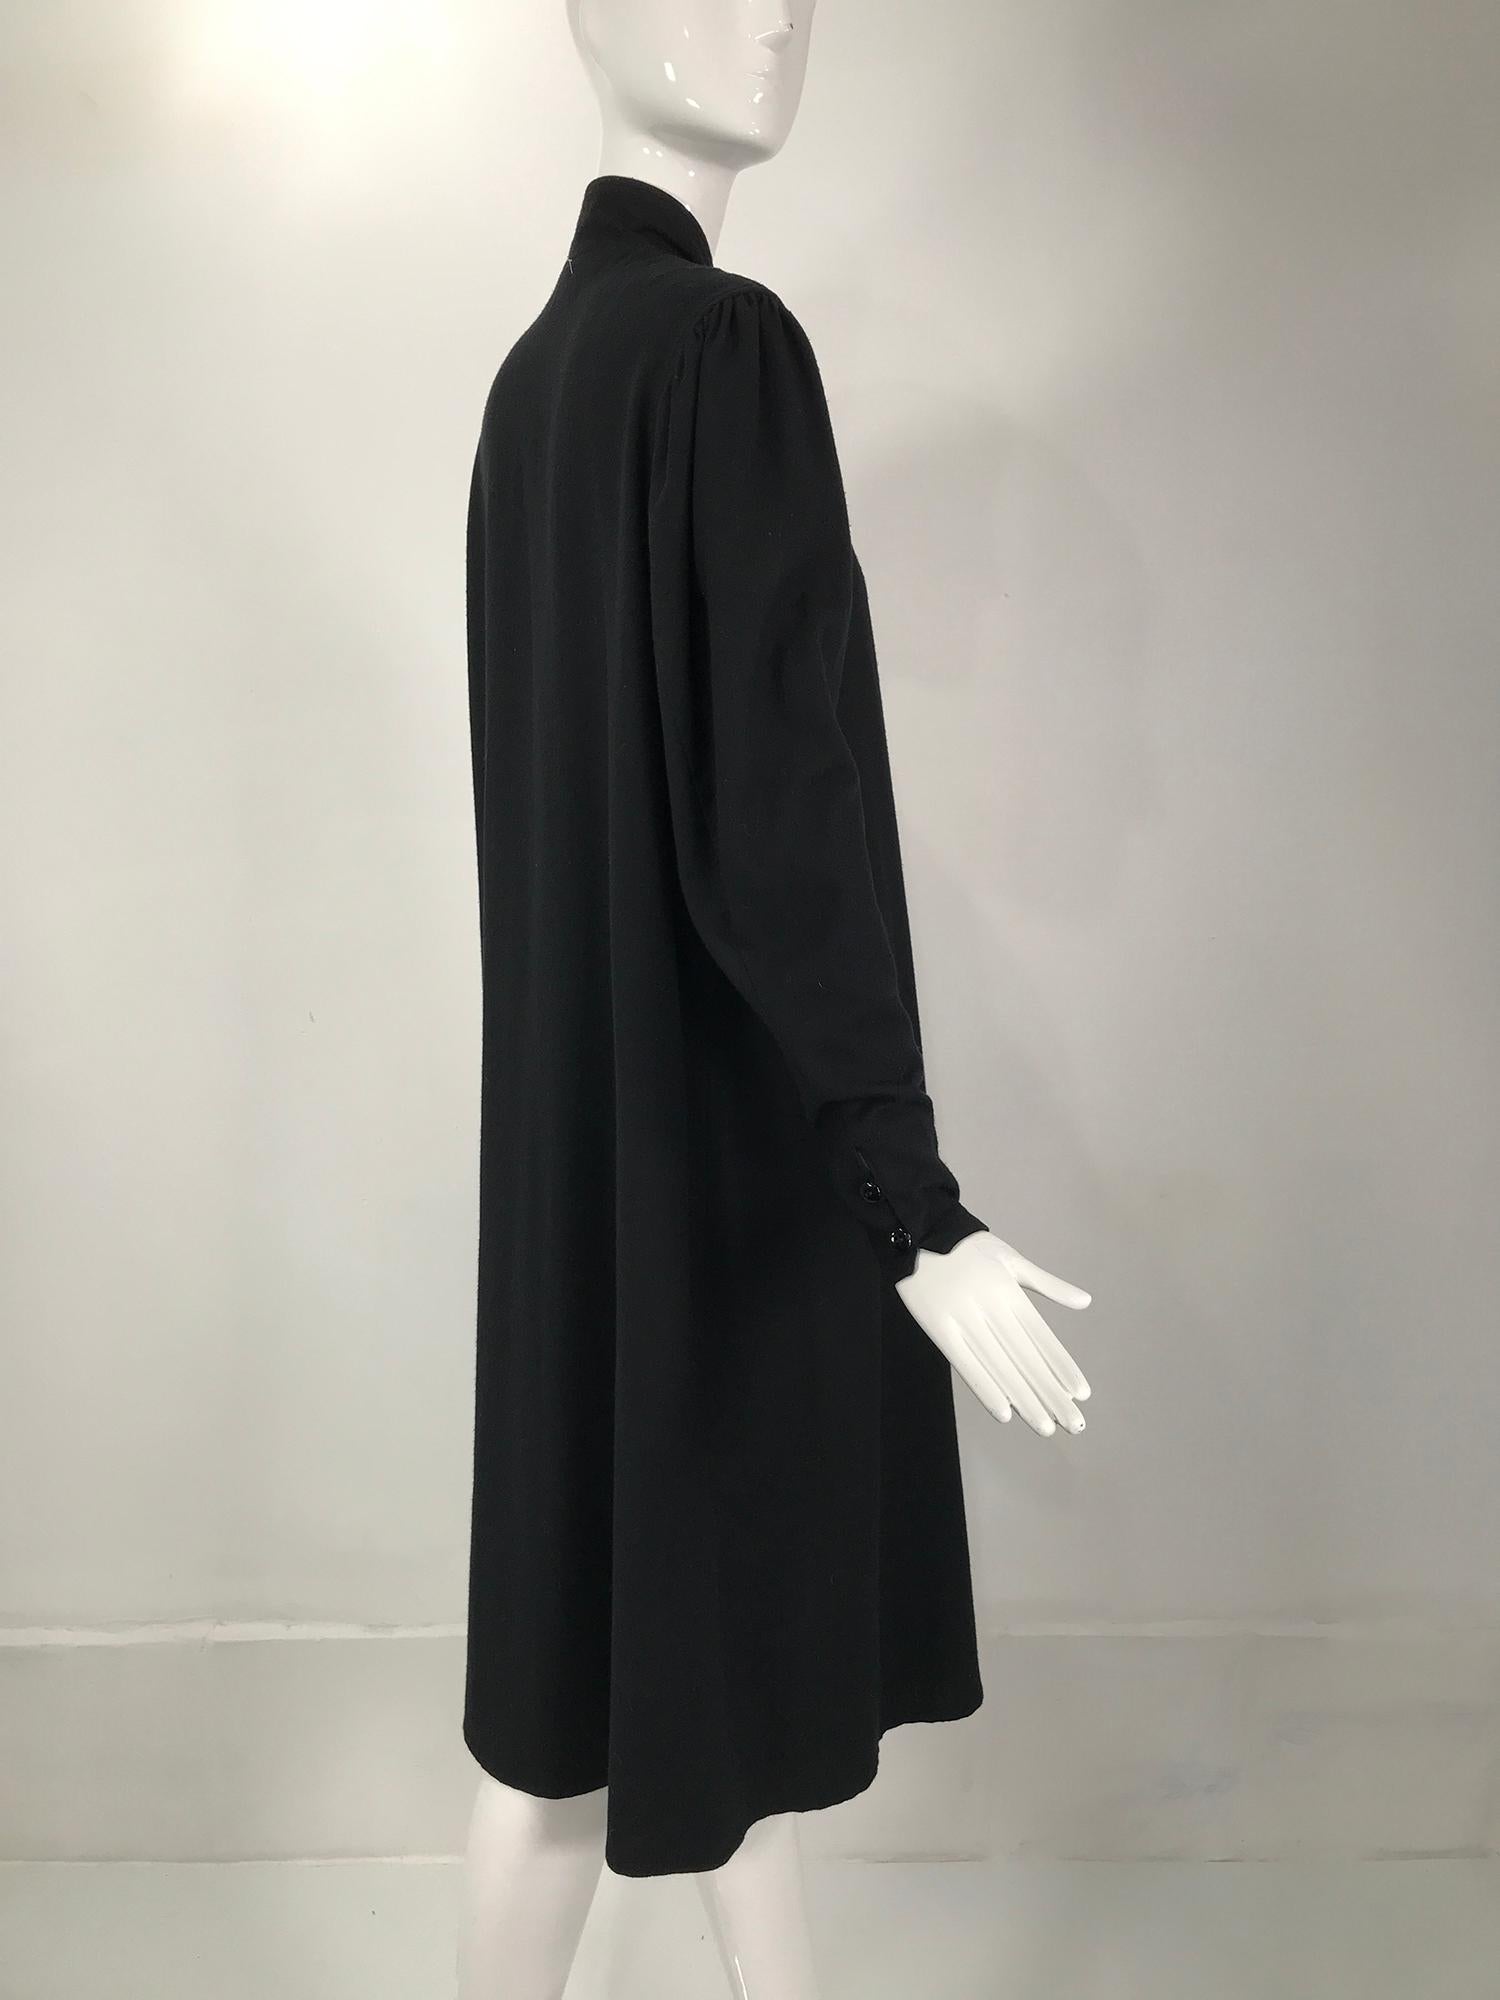 Kenzo Double Face Black Wool Cheongsam Style Coat 1980s For Sale 5